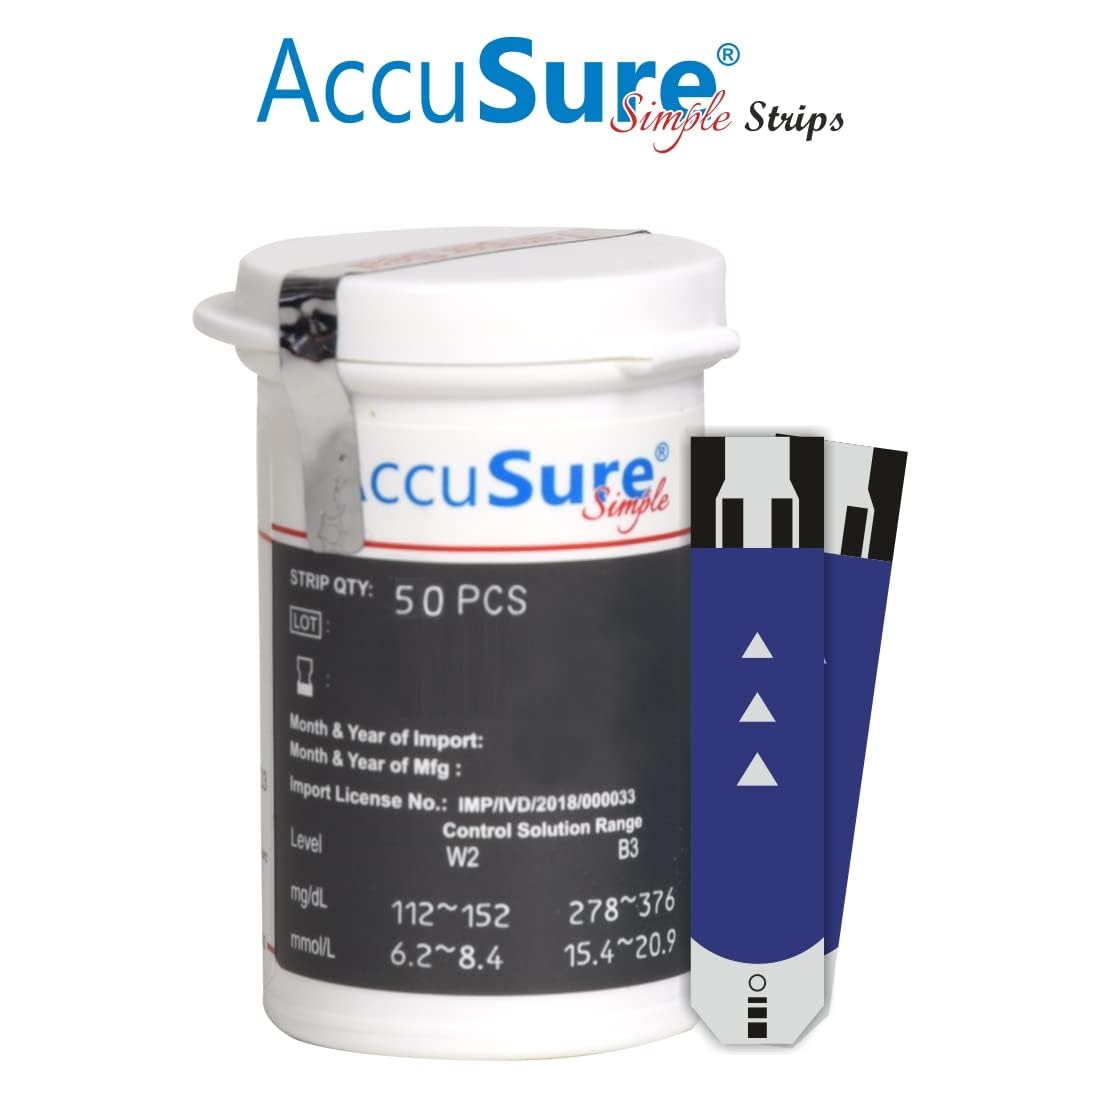 AccuSure Simple Blood Glucose Test Strip